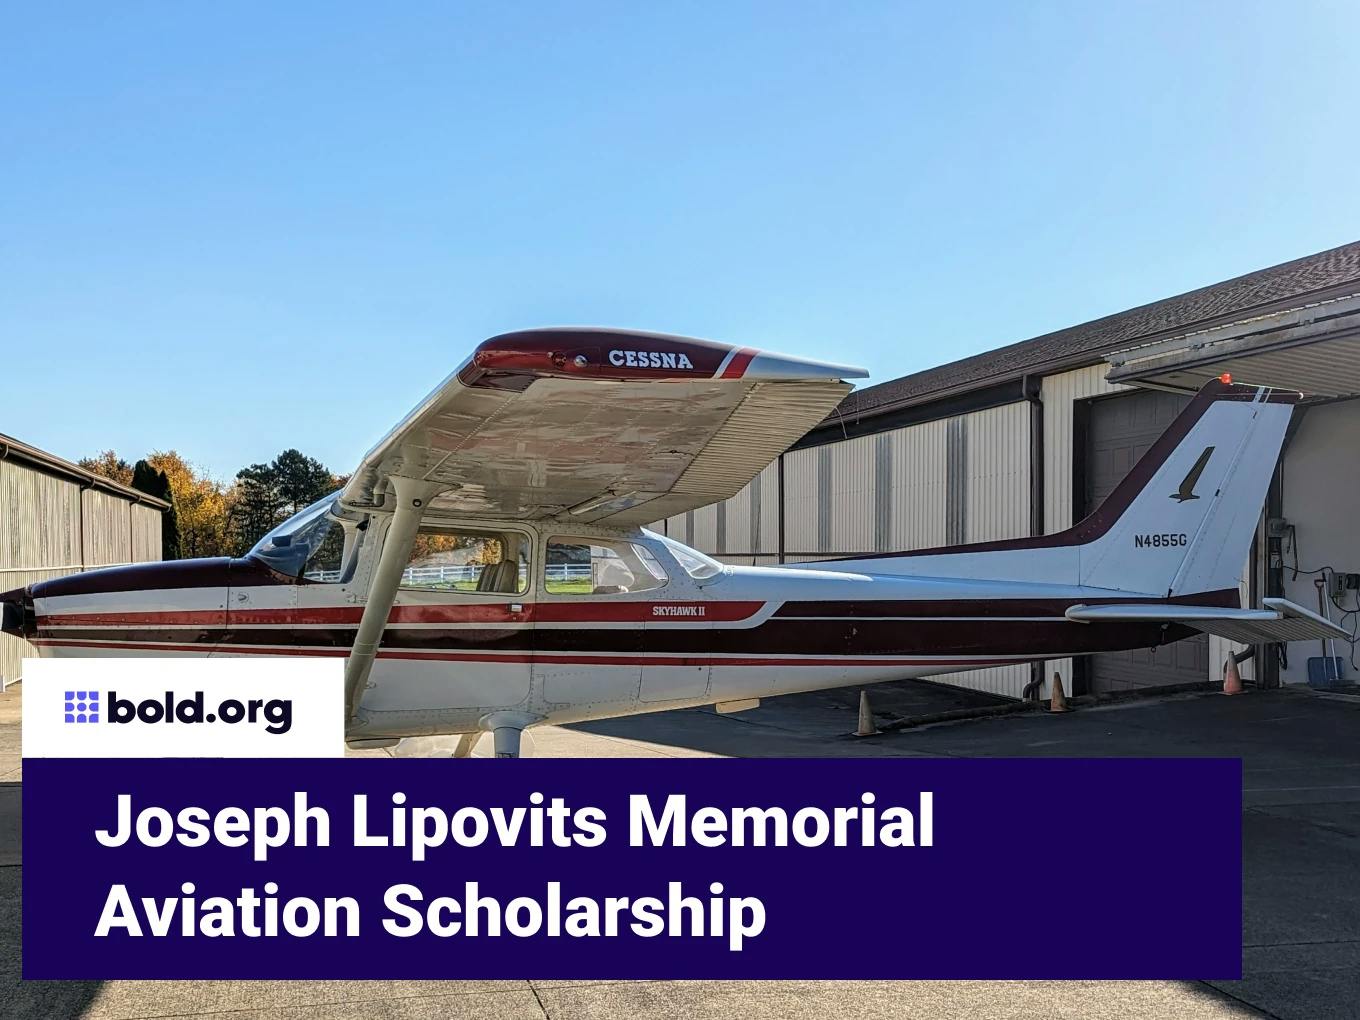 Joseph Lipovits Memorial Aviation Scholarship